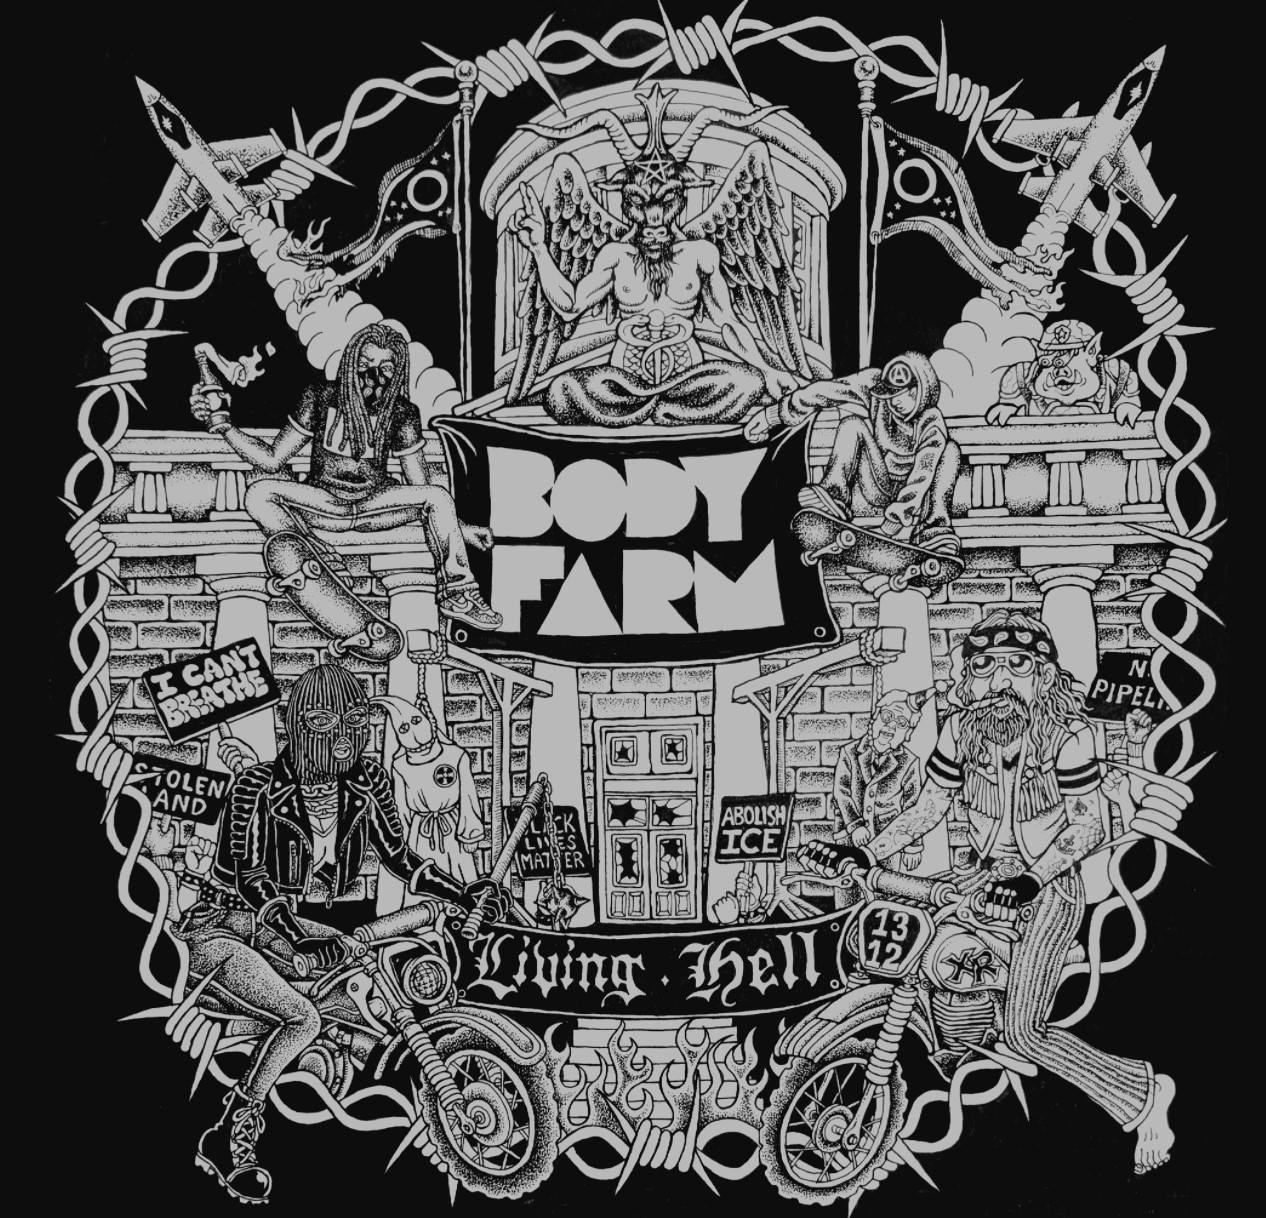 Body Farm - Living Hell LP